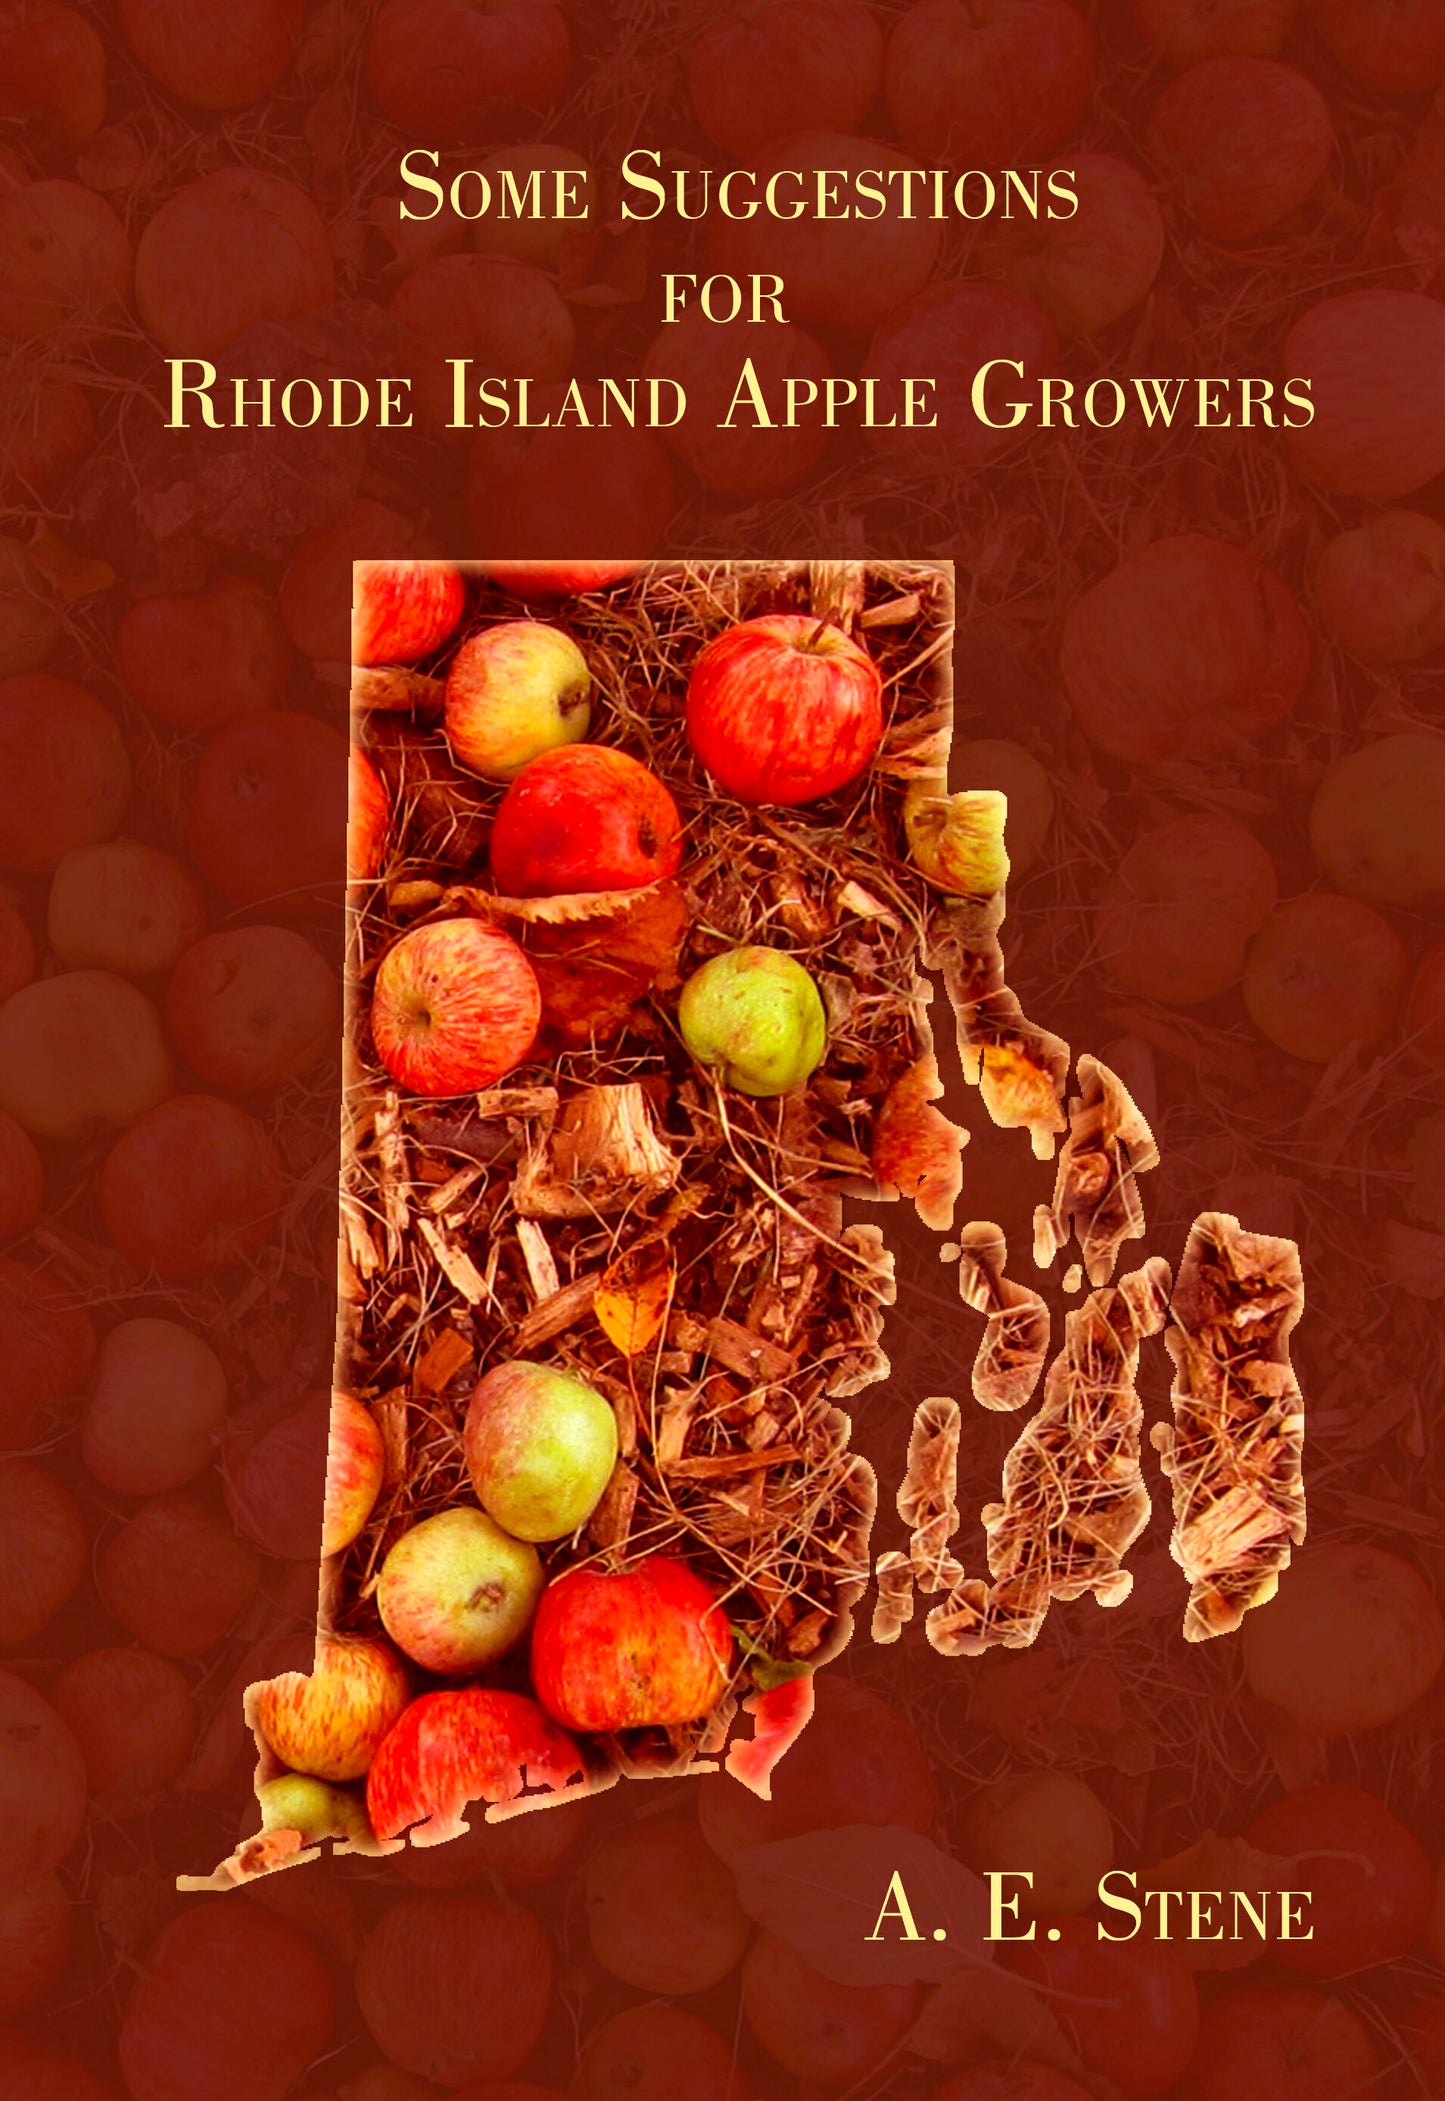 Rhode Island Apple Growers